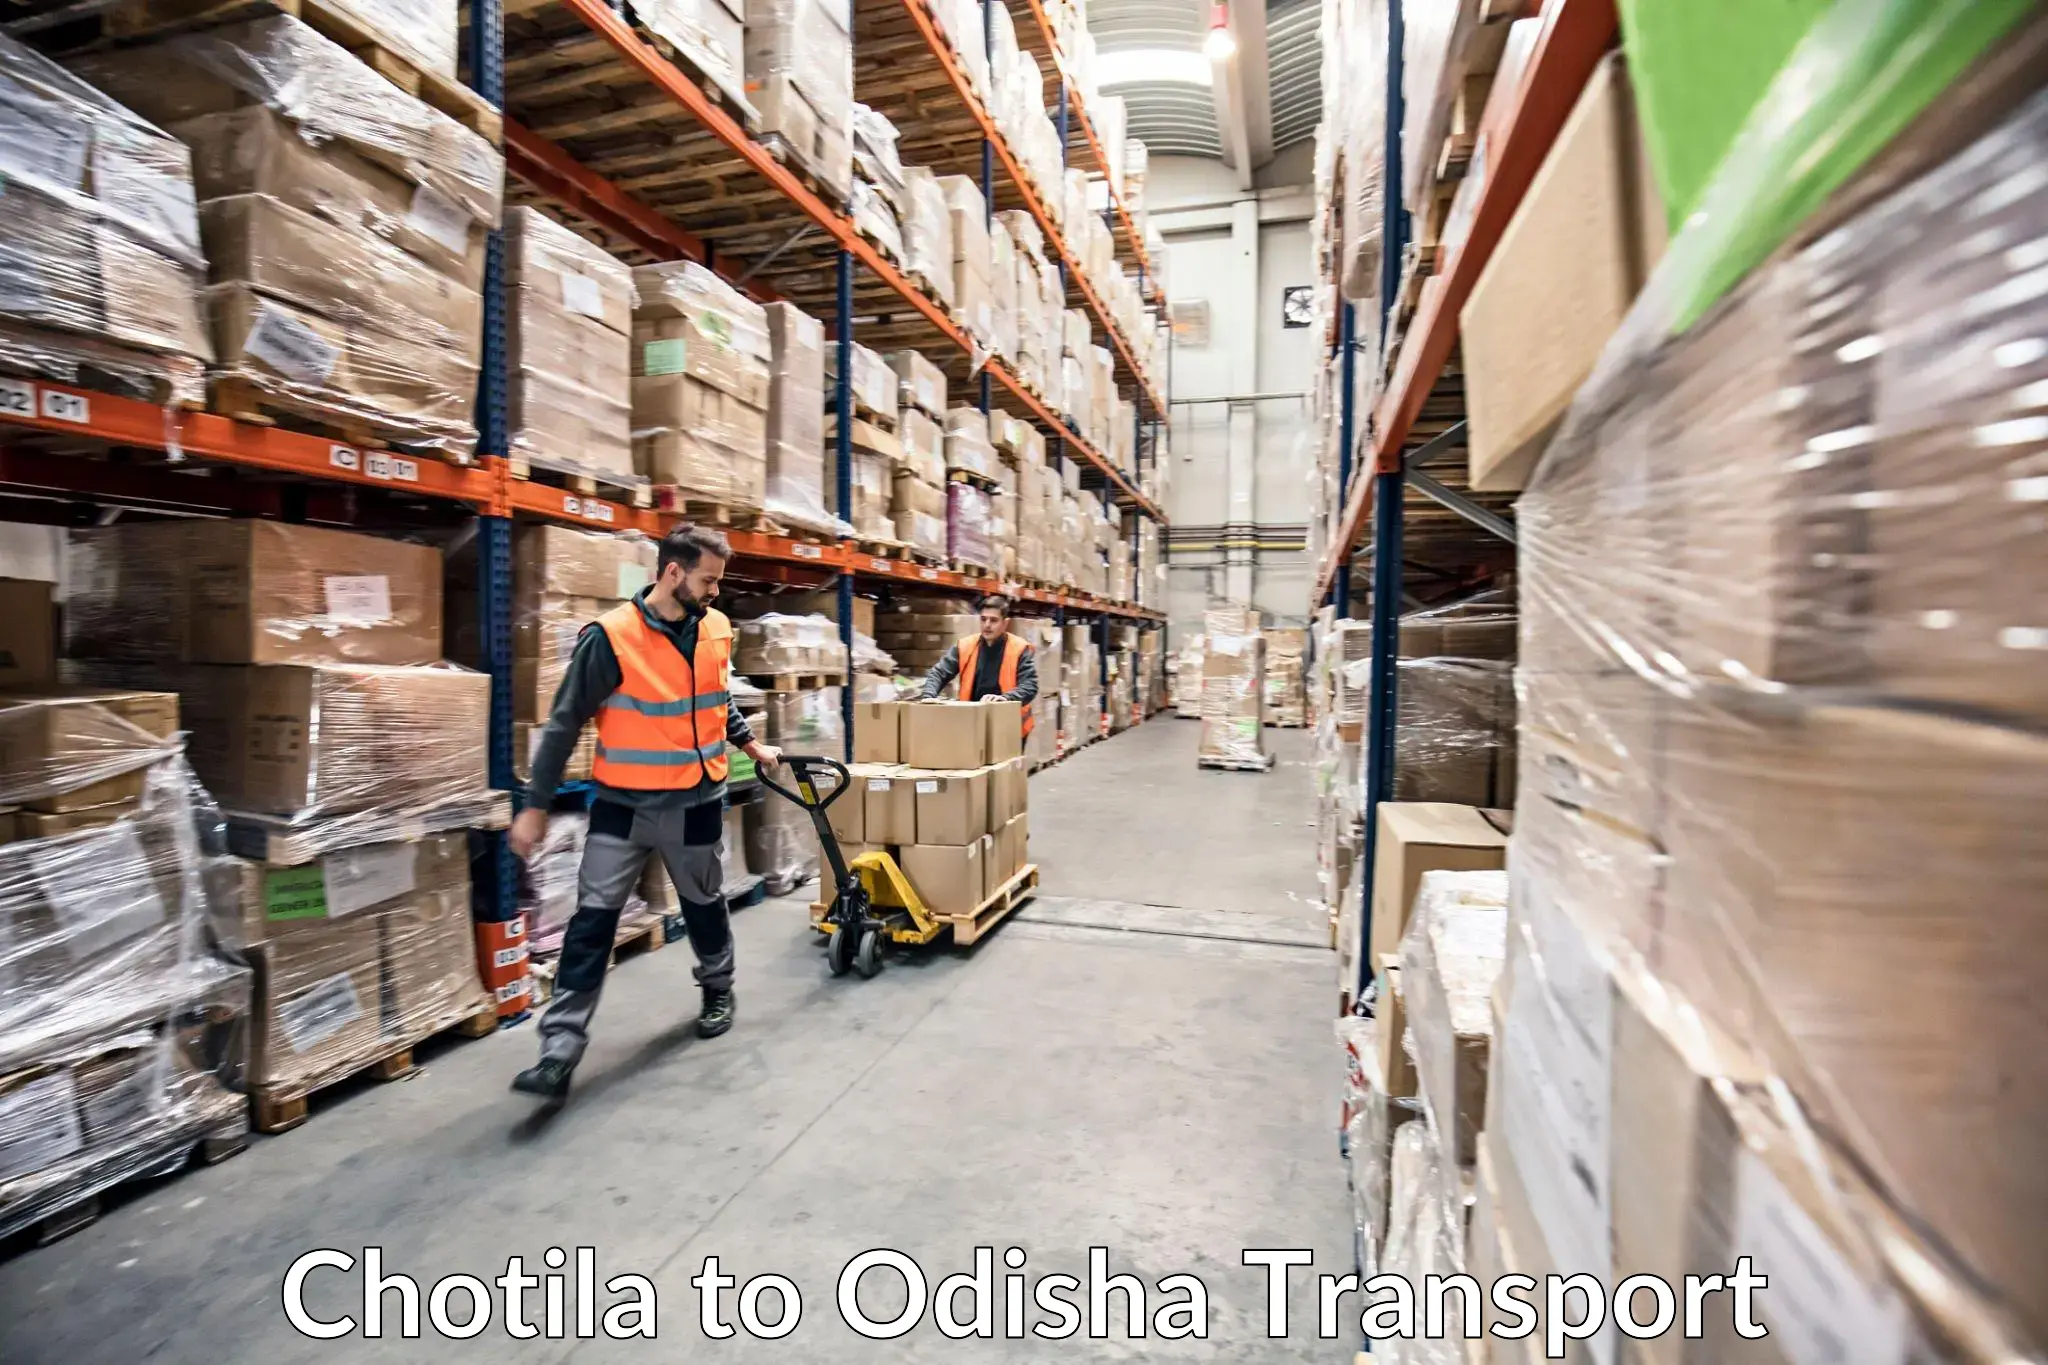 Truck transport companies in India Chotila to Jaraka